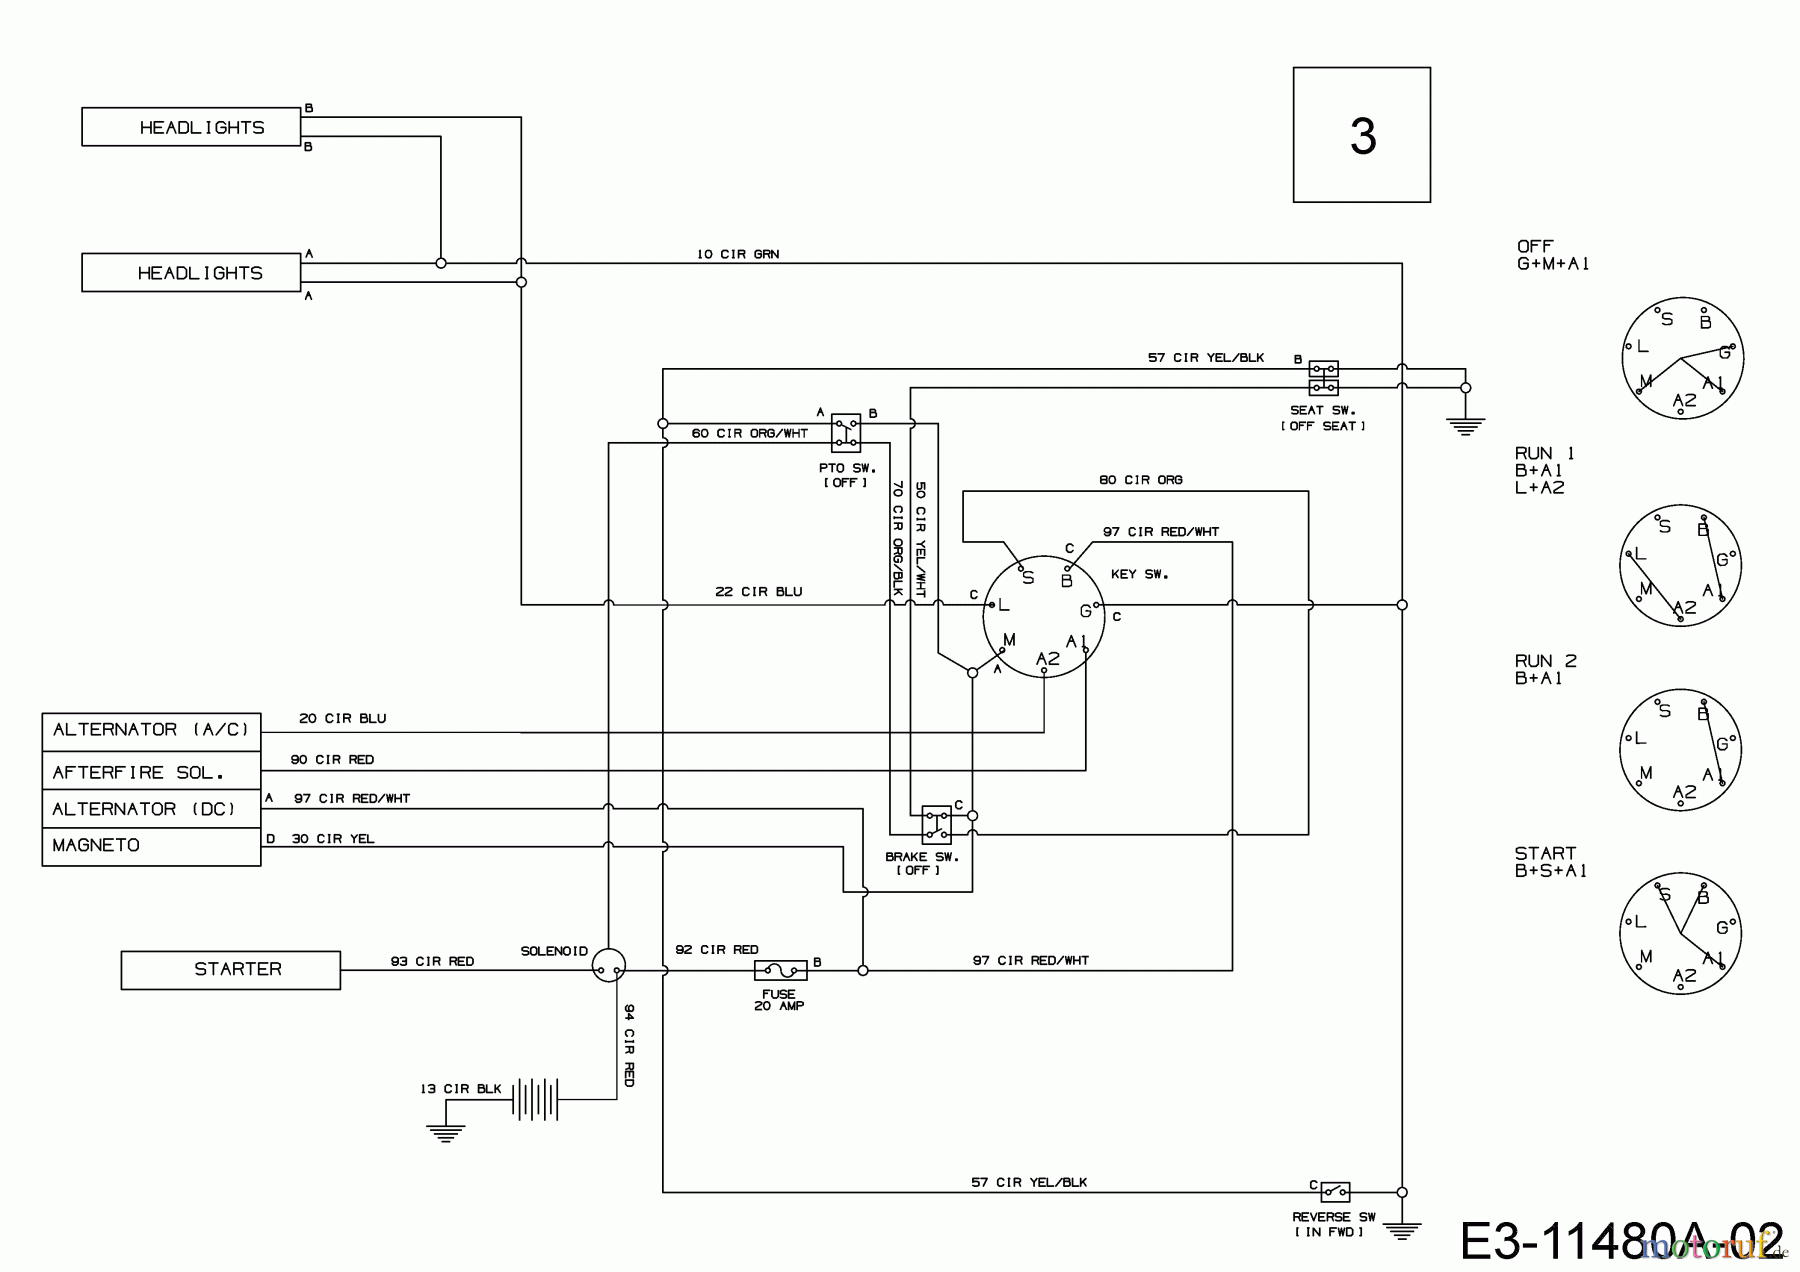  Bricolage Lawn tractors INV A13096 LB 13A776SF648 (2022) Wiring diagram